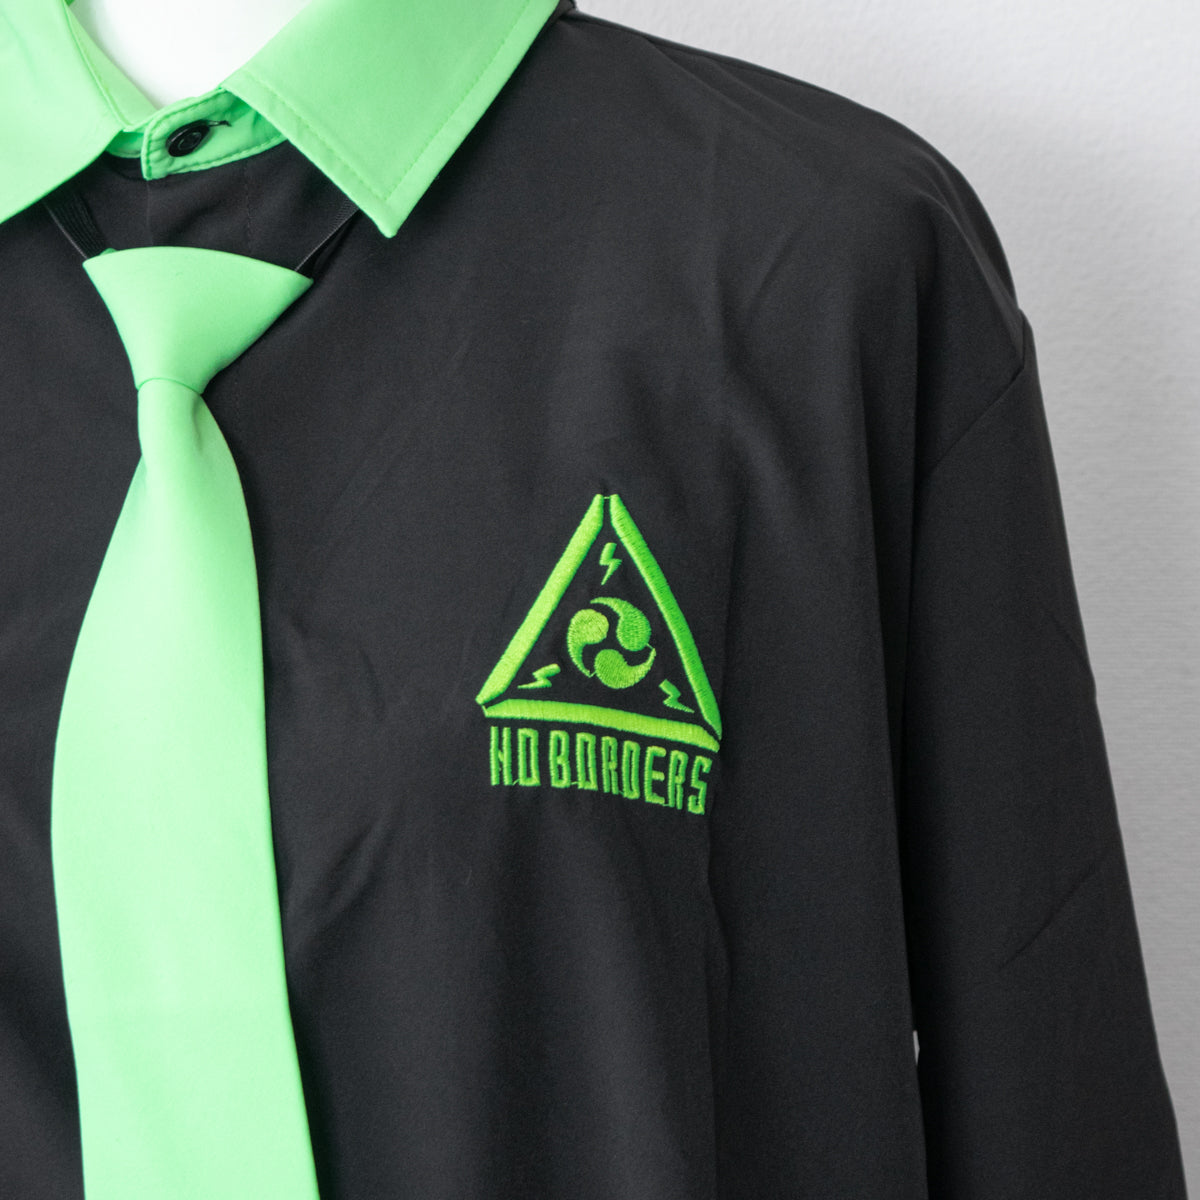 ACDC RAG Uzurai Shirt Green